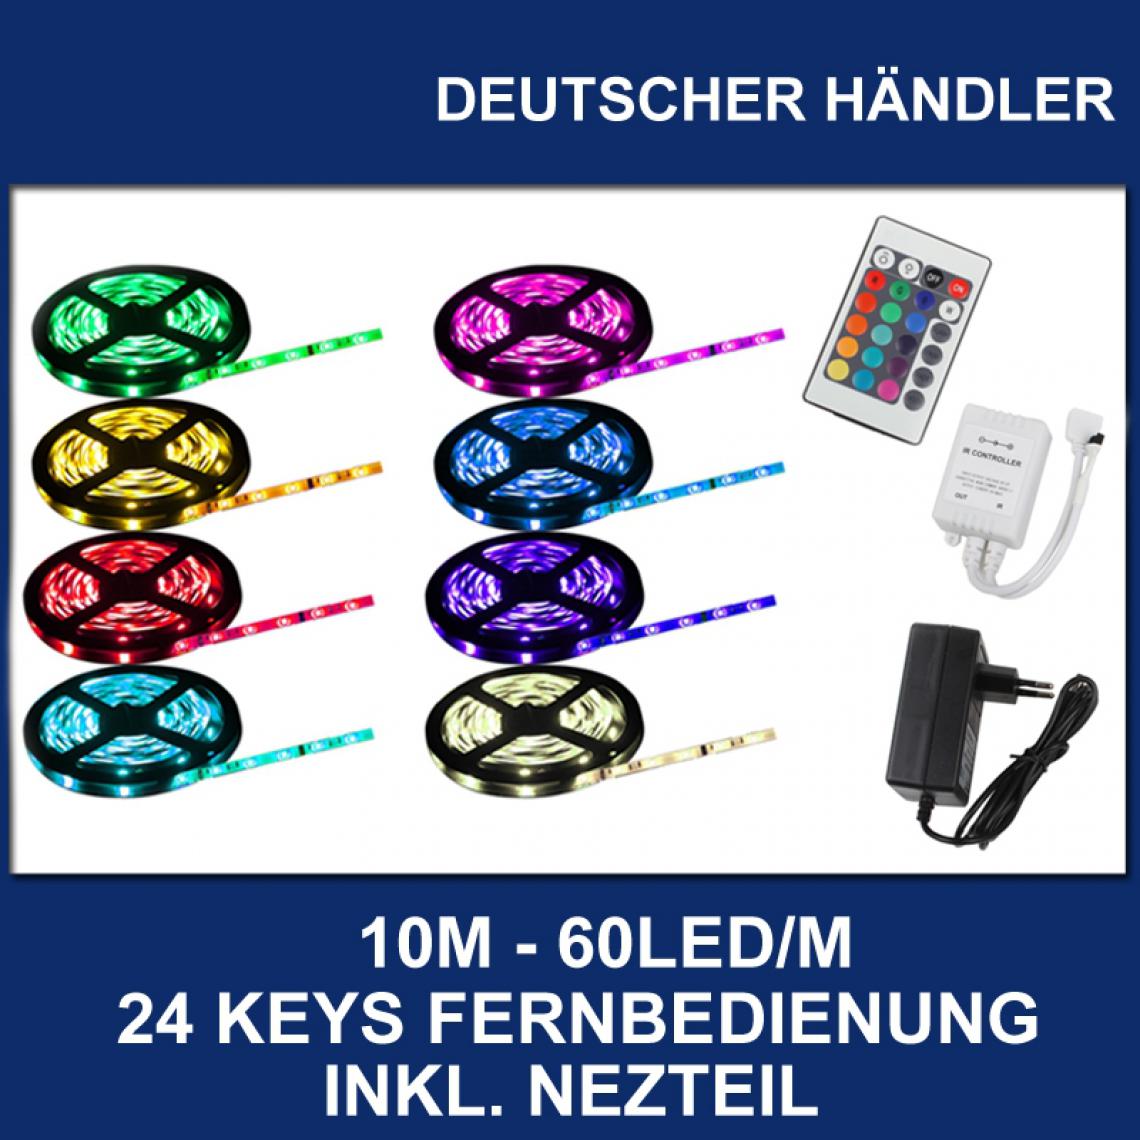 Ecd Germany - ECD Germany Ruban à LED 10m avec télécommande IP 24 boutons et alimentation 2A couleur lumineuse RVB - Ruban LED